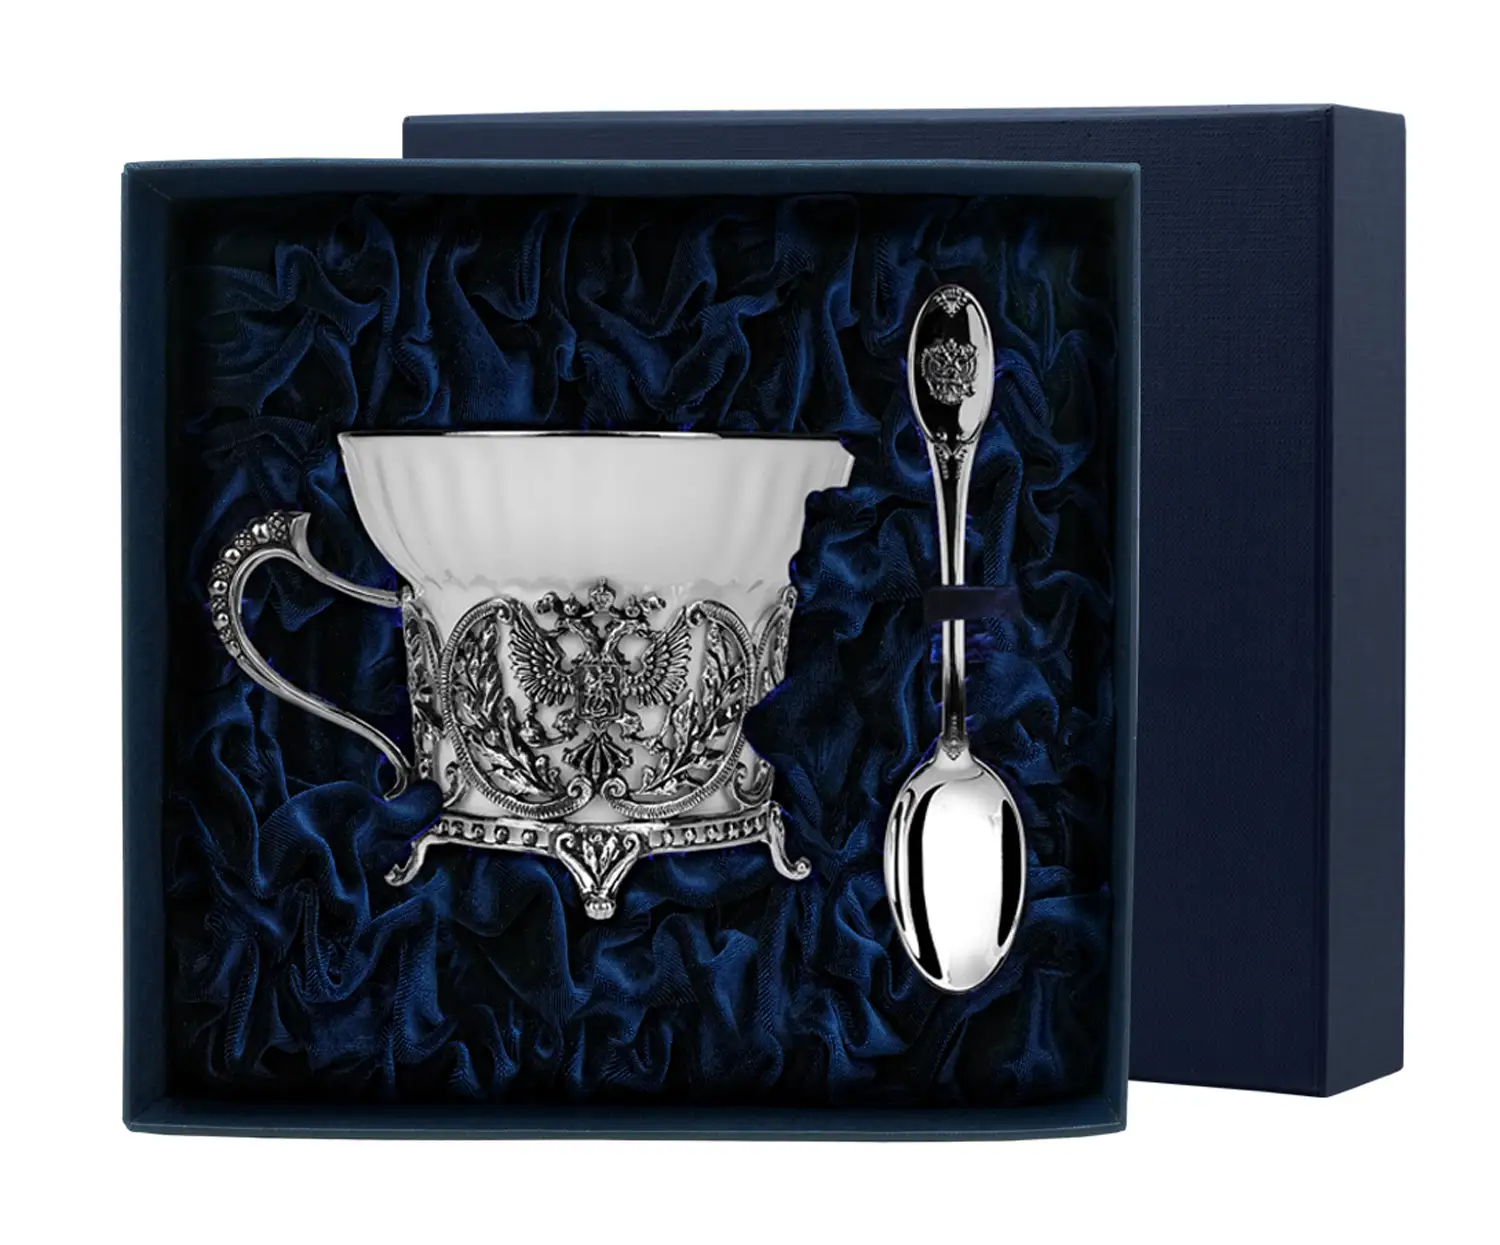 Набор чайная чашка Герб: ложка, чашка (Серебро 925) набор чайная чашка витая ложка чашка серебро 925